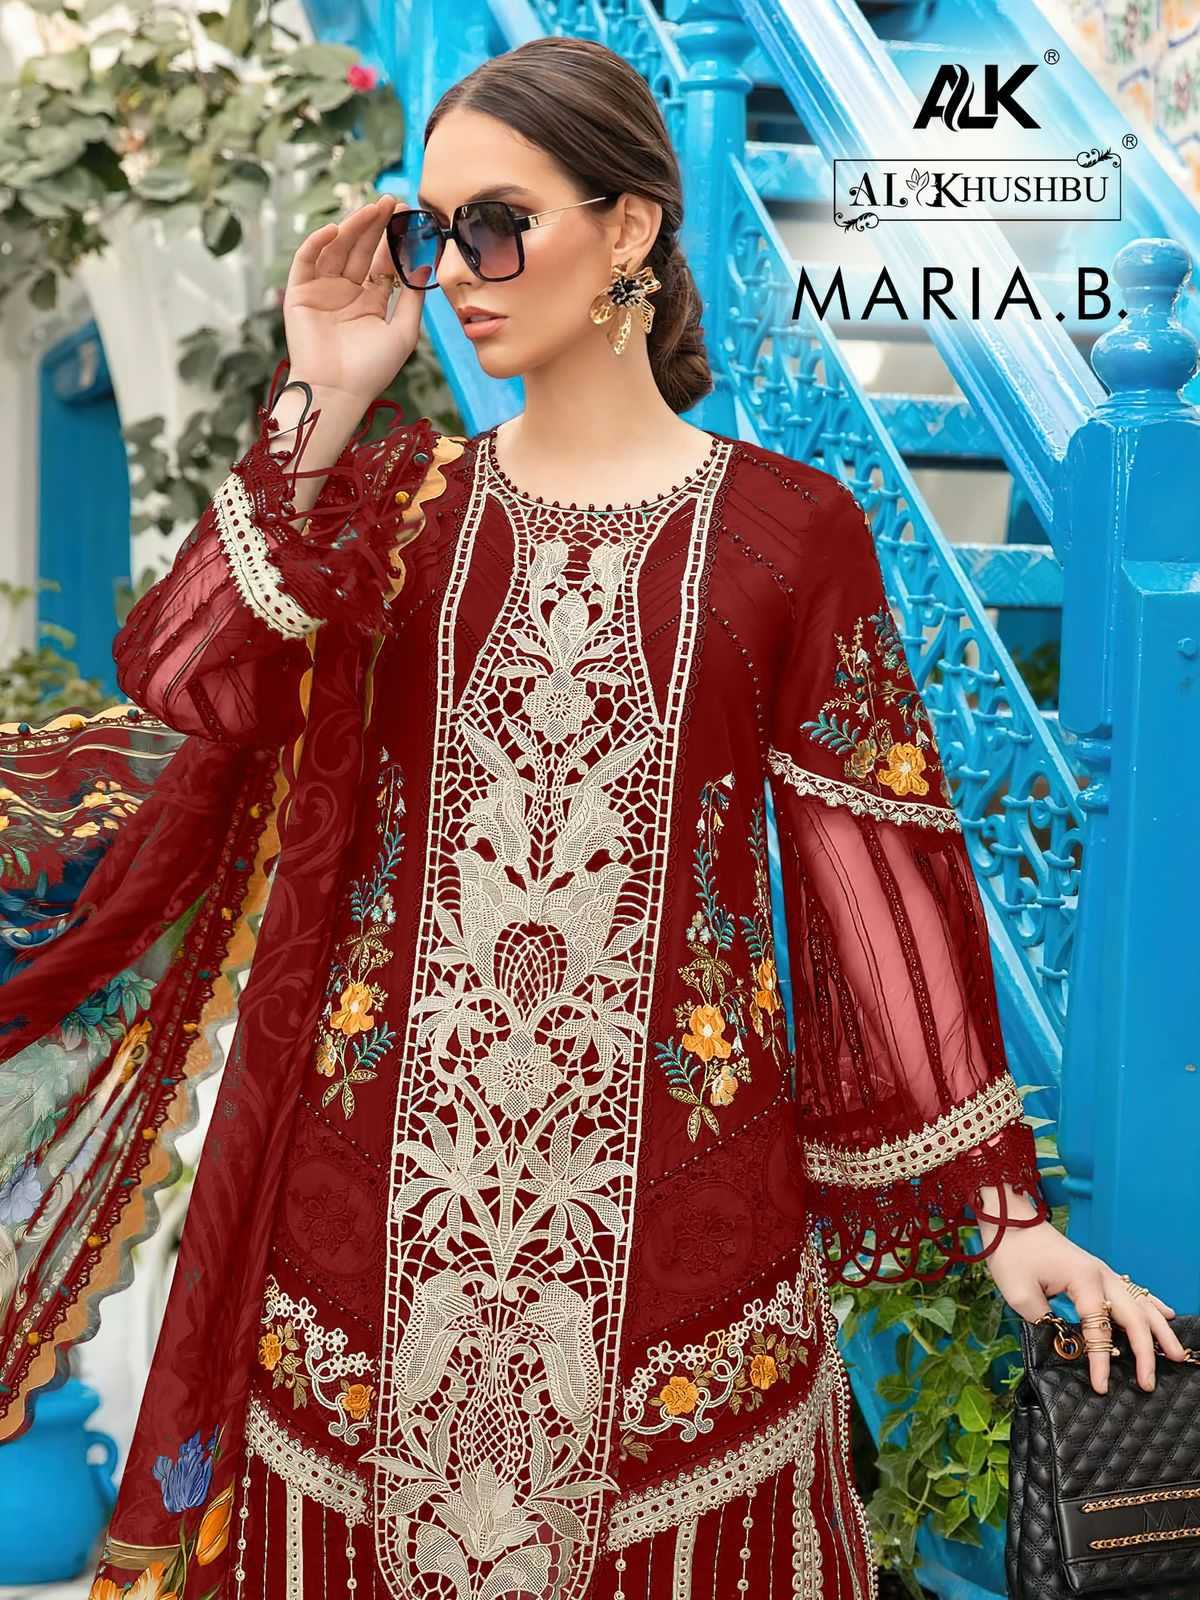 al_khushbu presents maria-b ethnic style pakistani cambric cotton salwar suit 